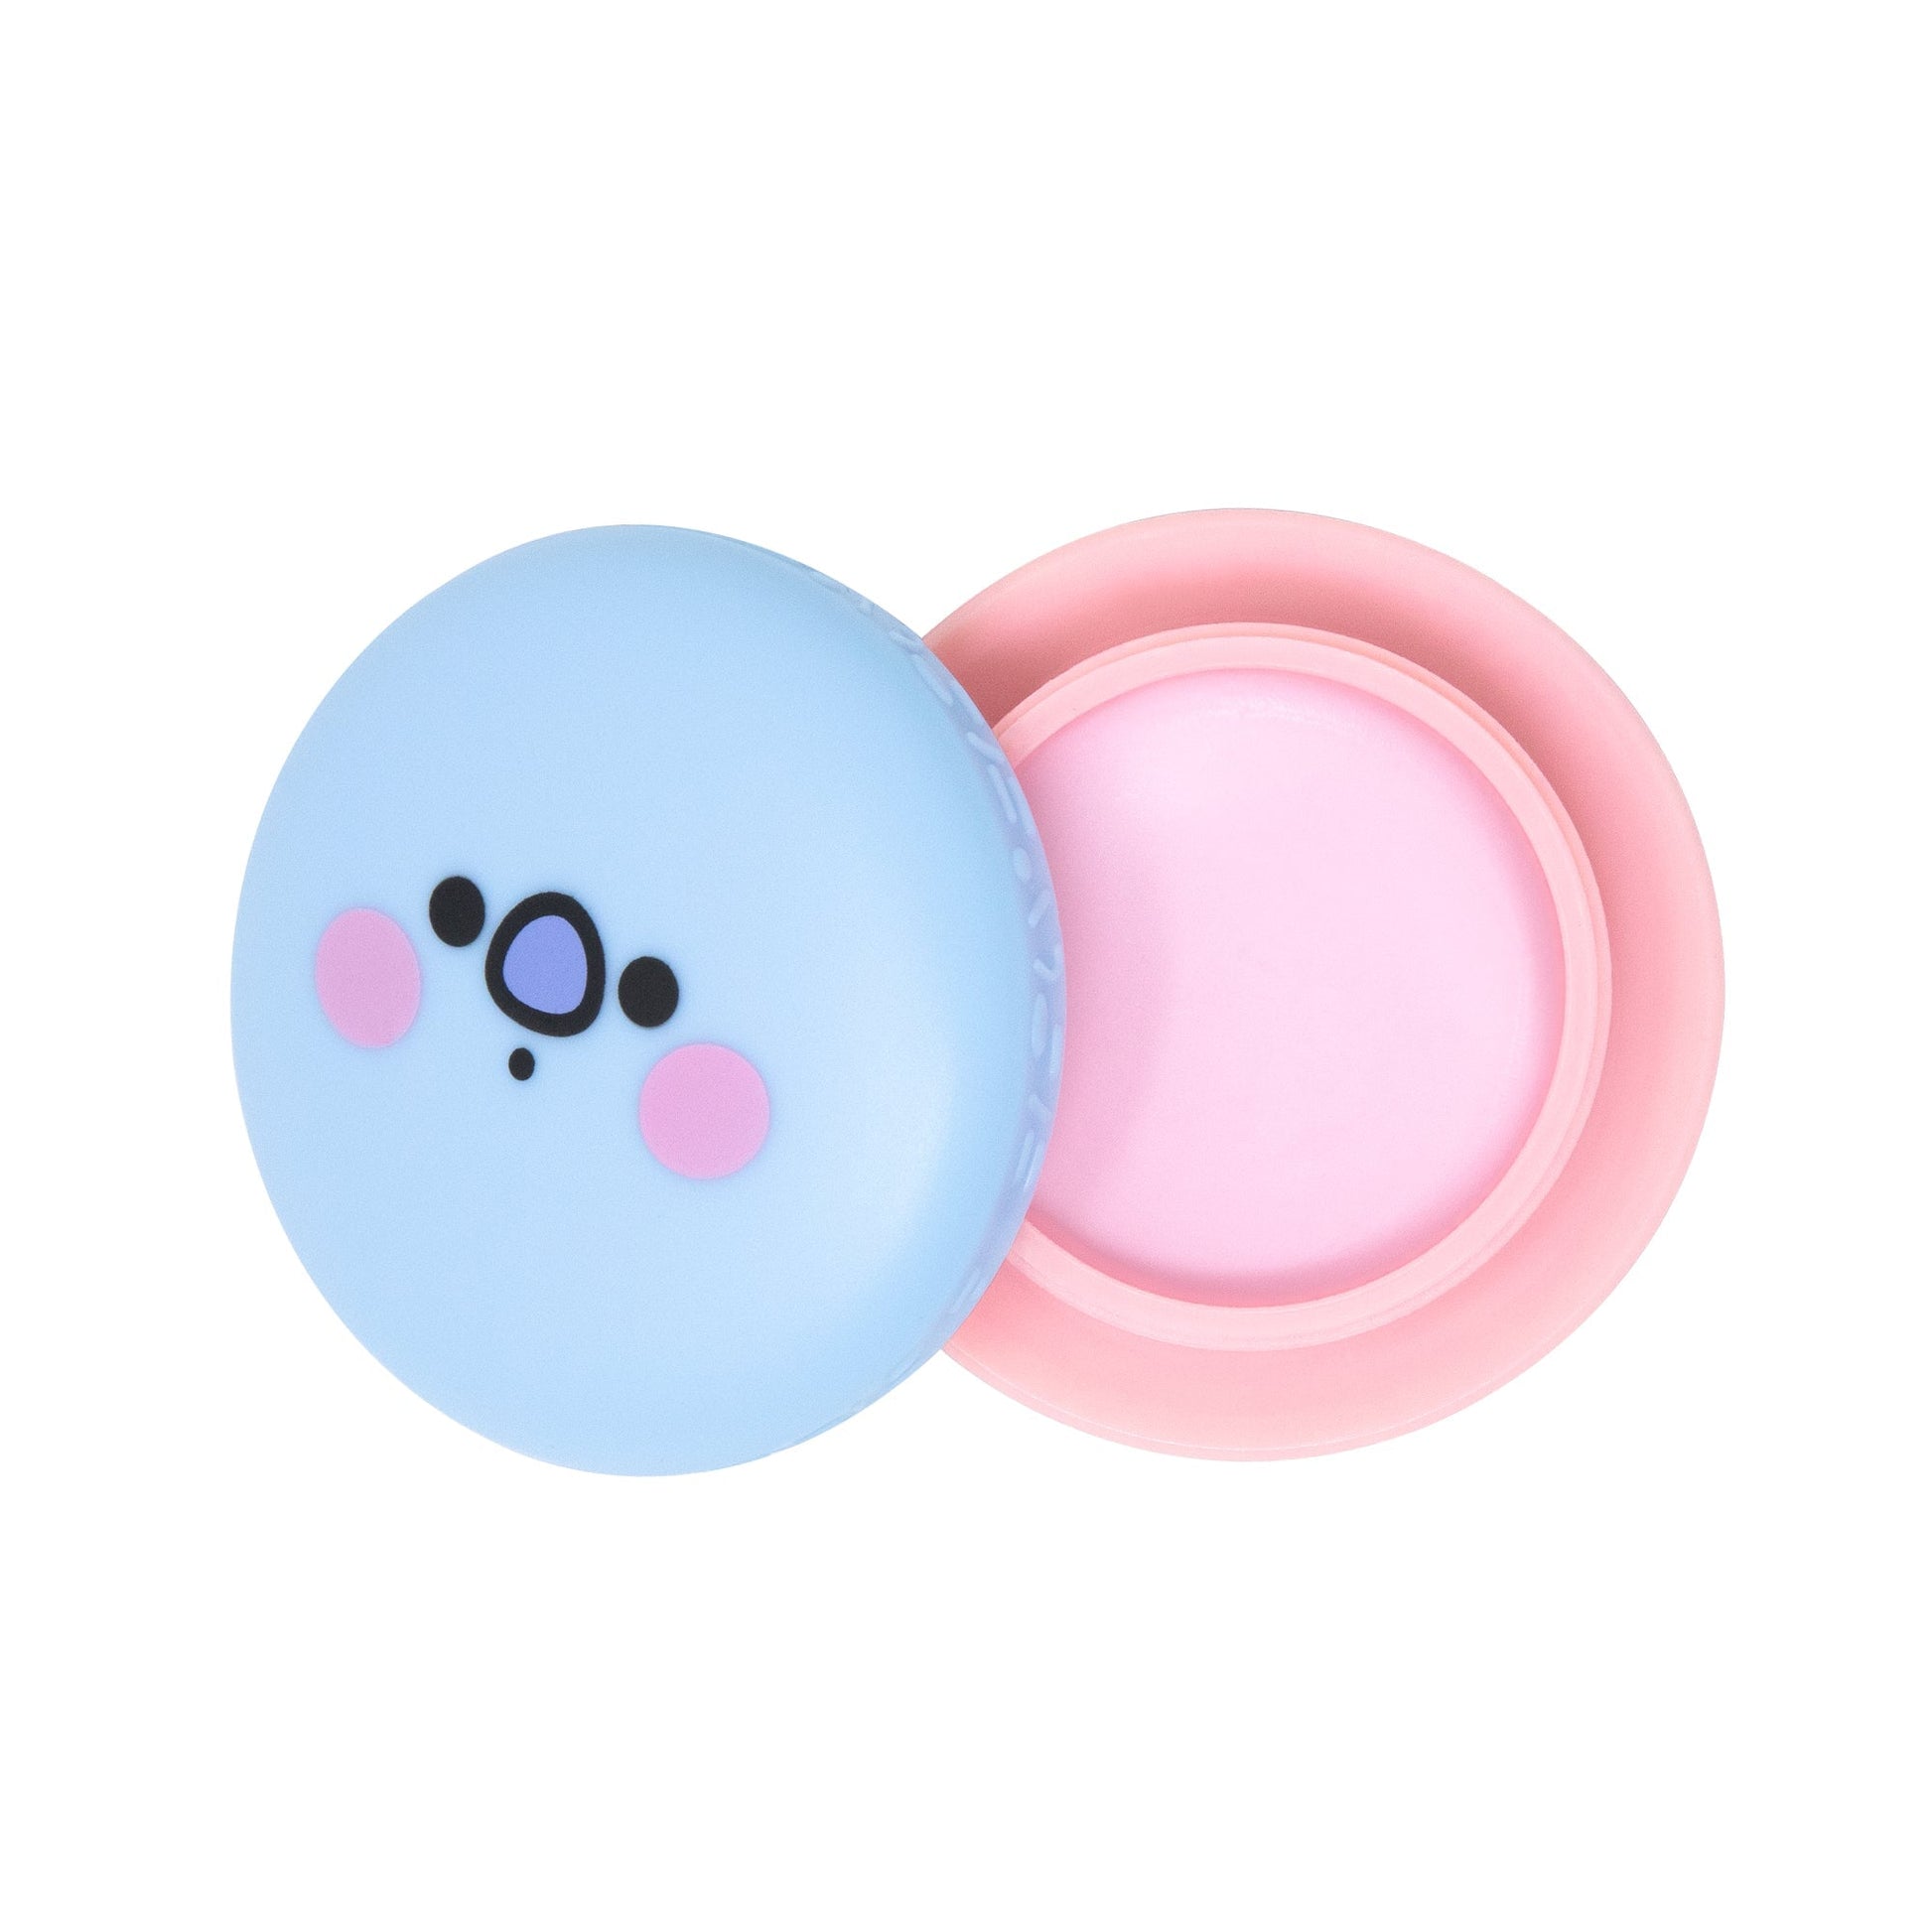 Hello Kitty & BT21 KOYA Moisturizing Macaron Lip Balm Duo, Soda Pop Flavored $18